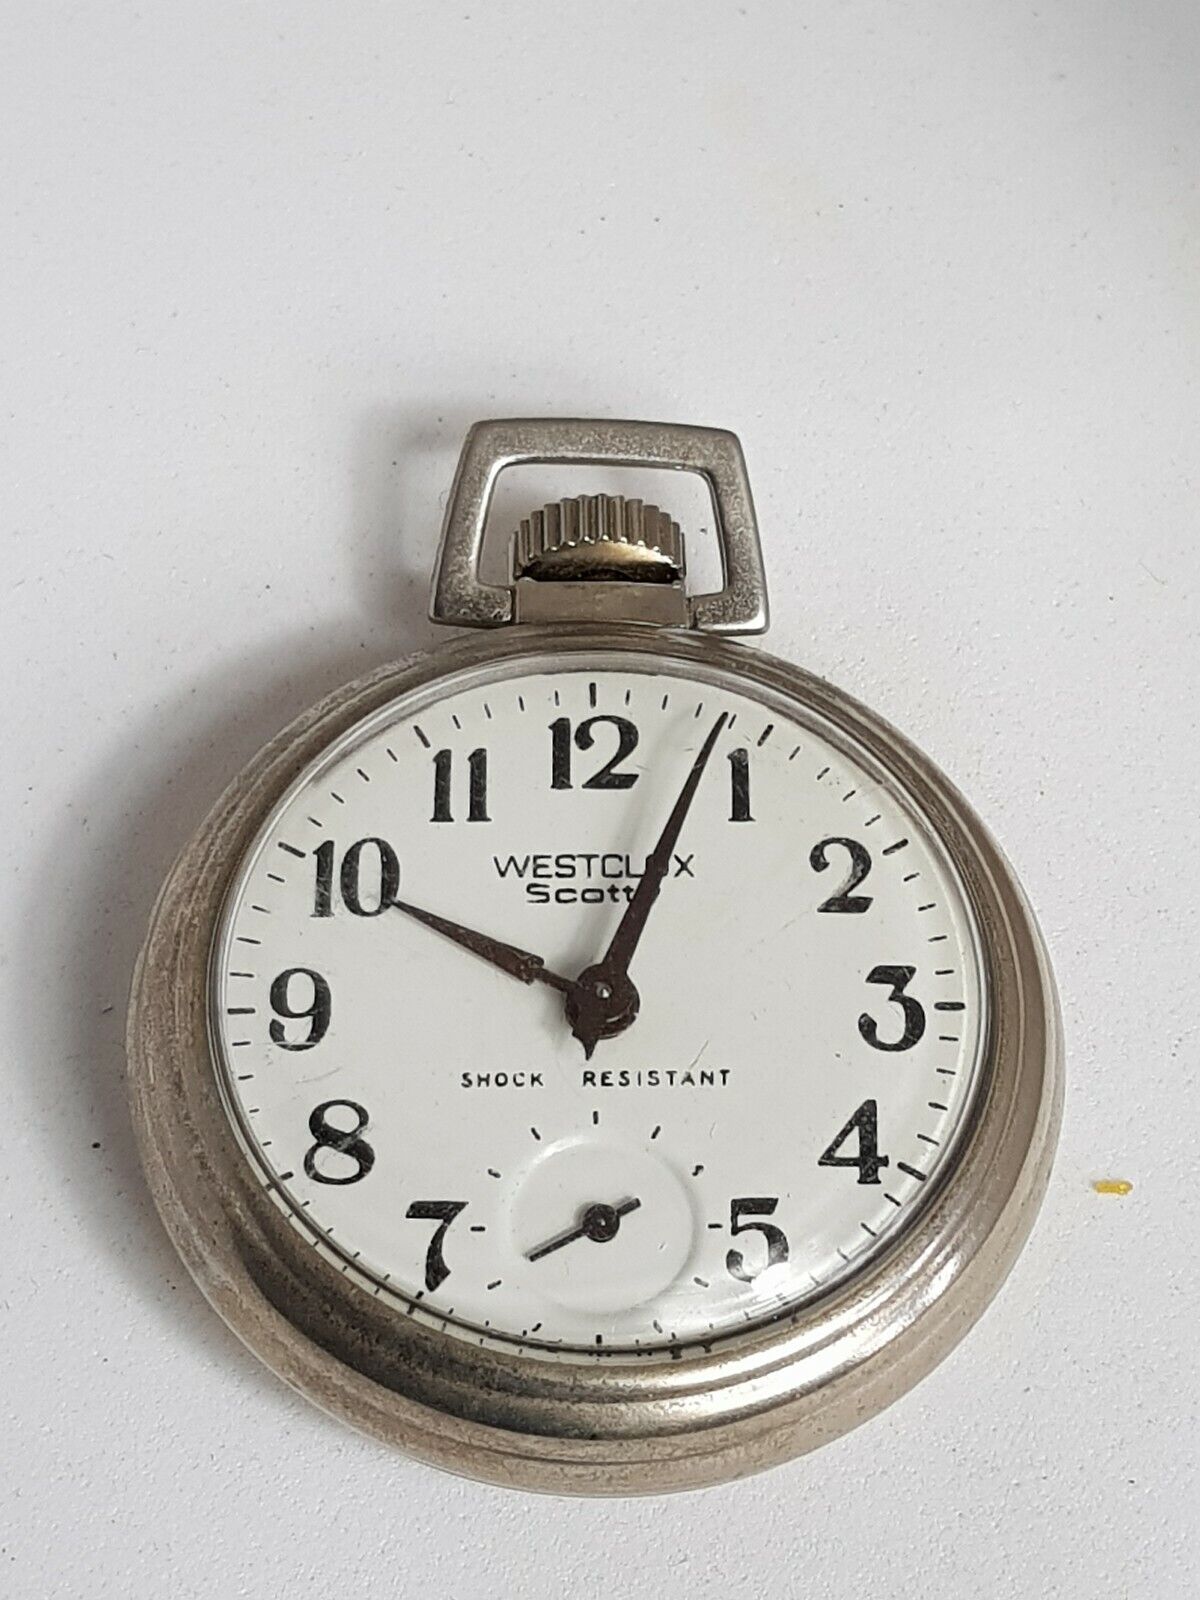 Vintage Westclox Scotty Pocket Watch